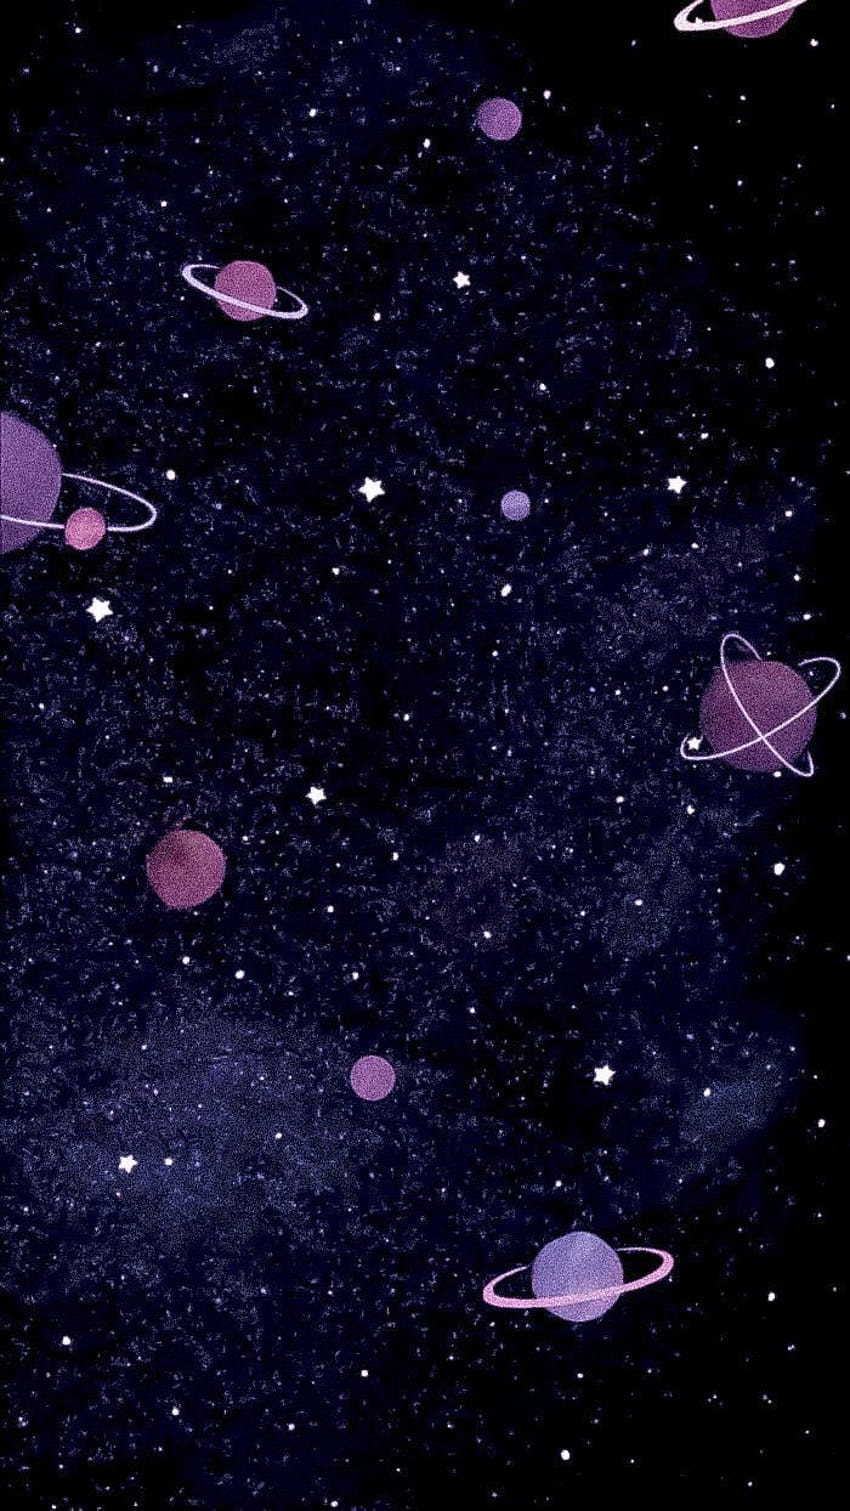 Ungu, Violet, Langit, Luar angkasa, Objek astronomi, Teks Pur…, ruang pastel wallpaper ponsel HD